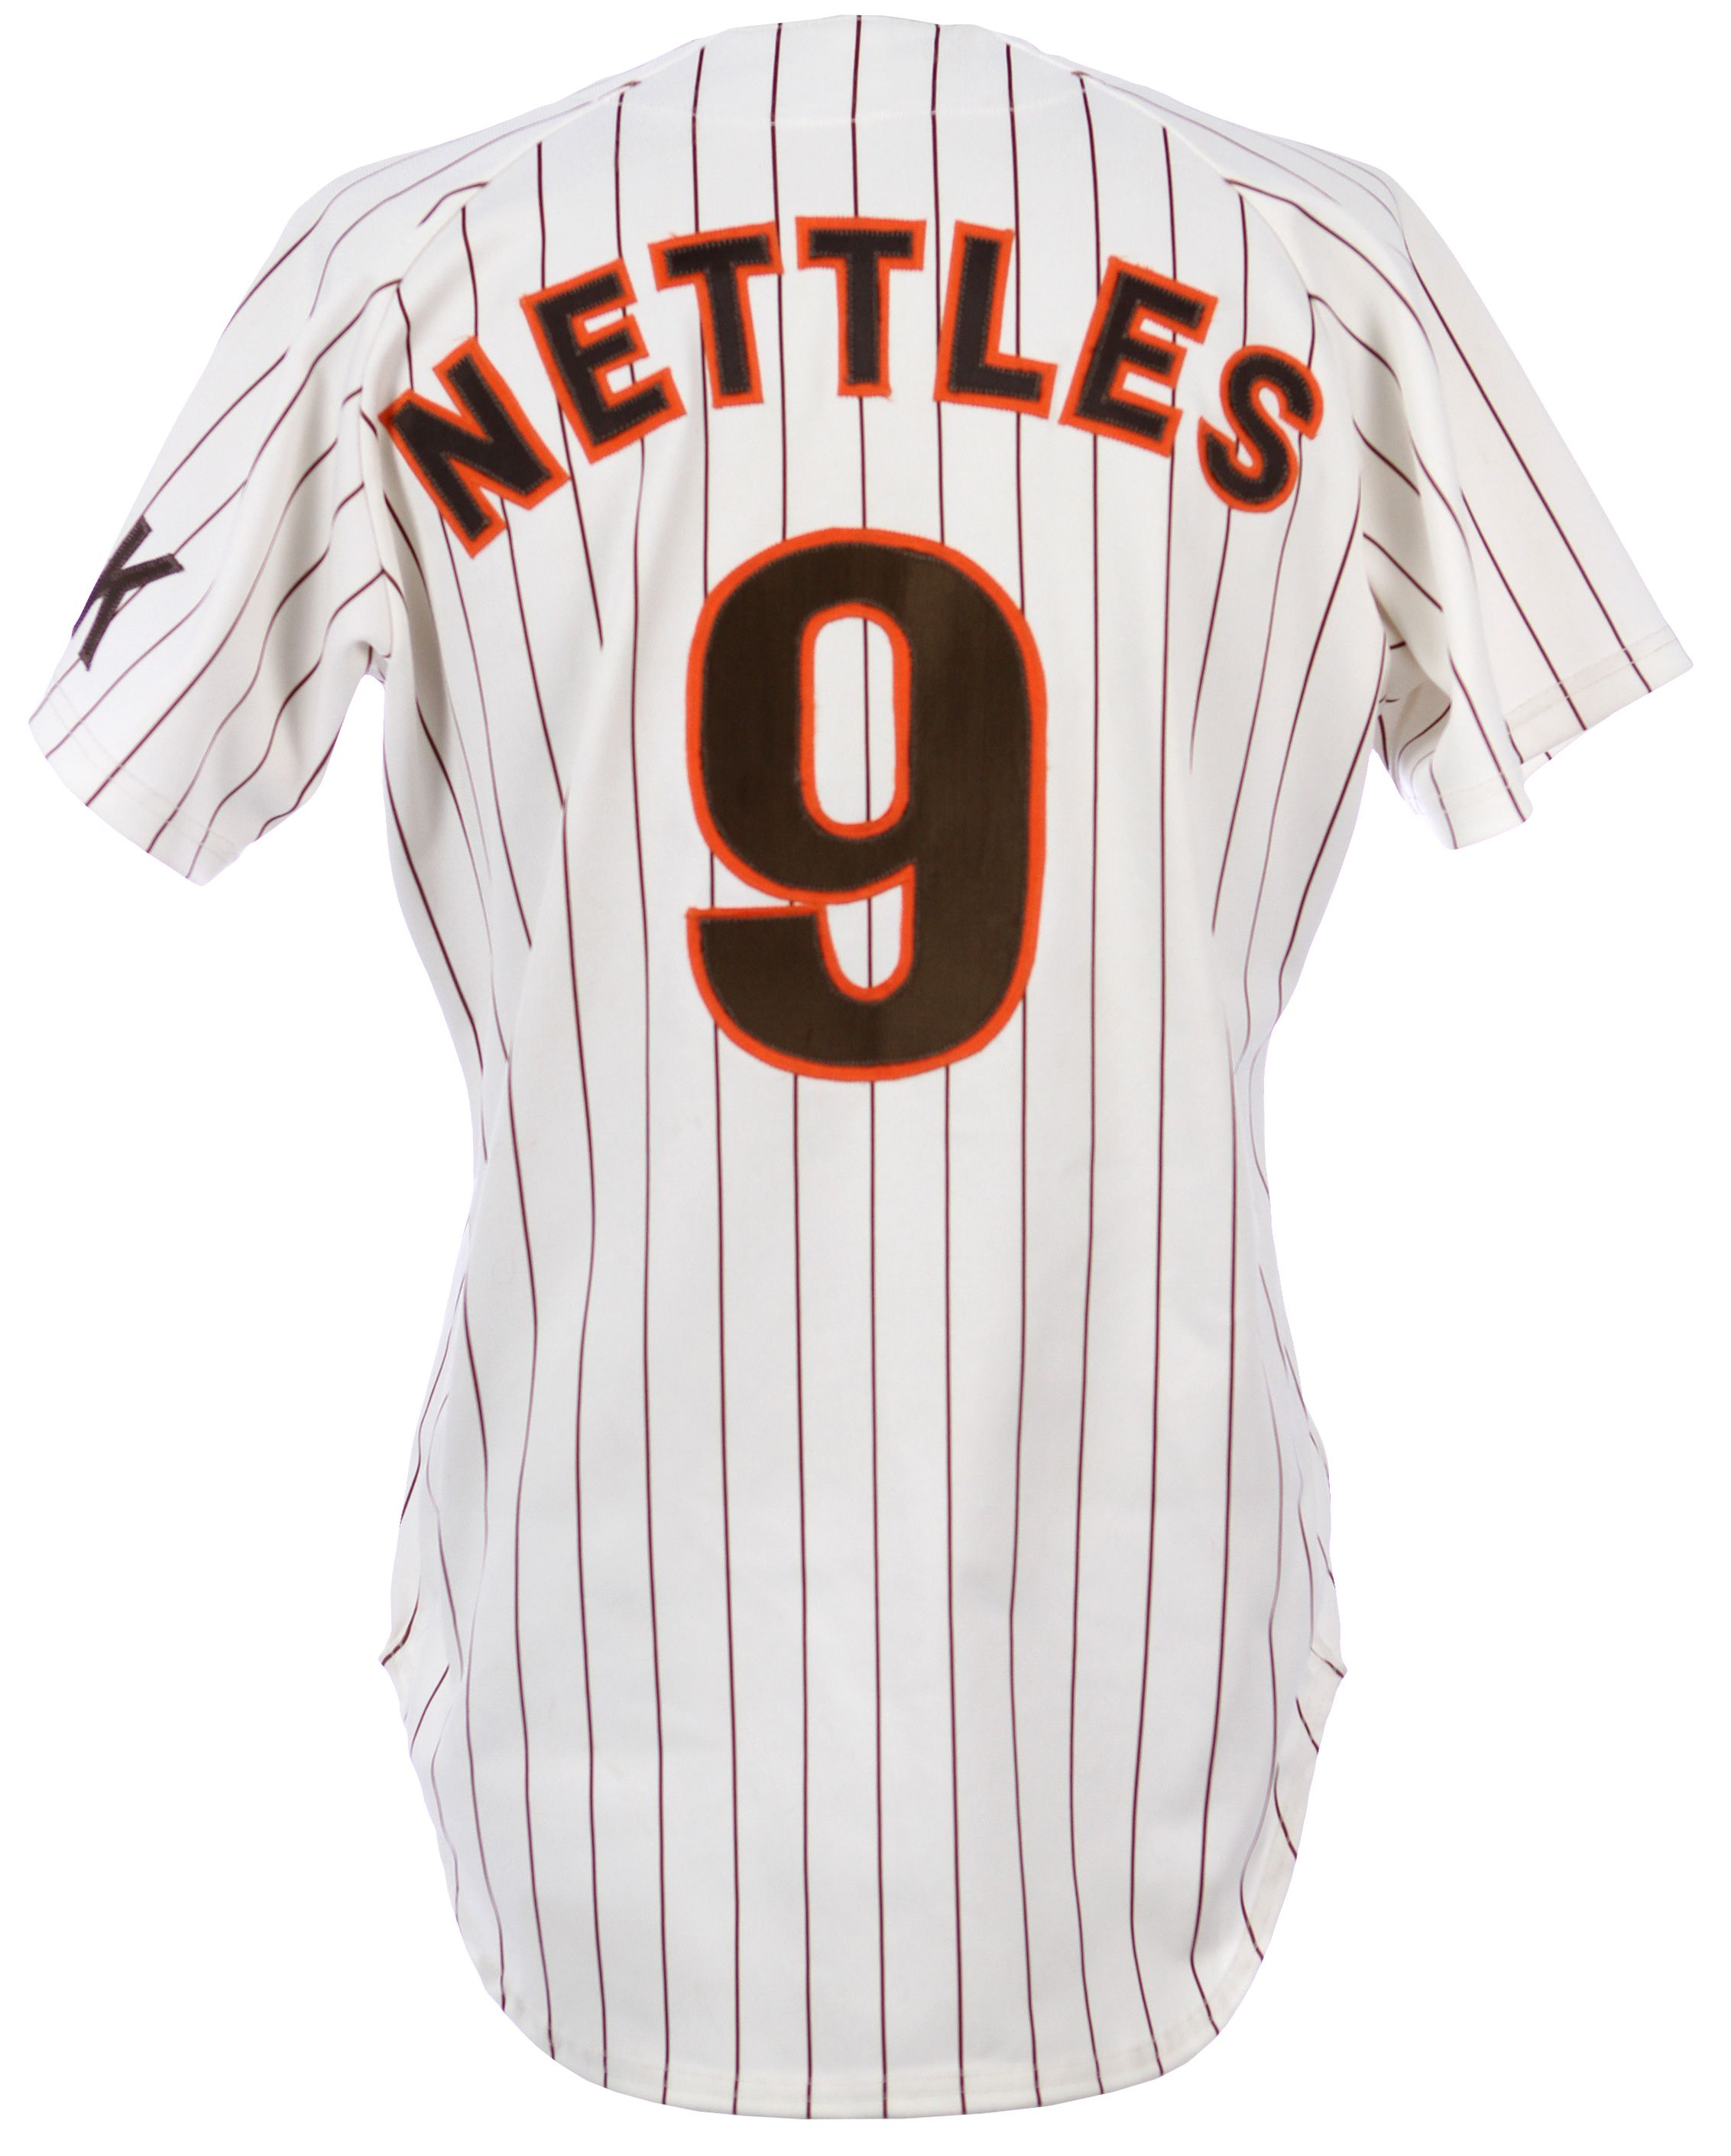 Graig Nettles Jersey  San Diego Padres Graig Nettles Jerseys